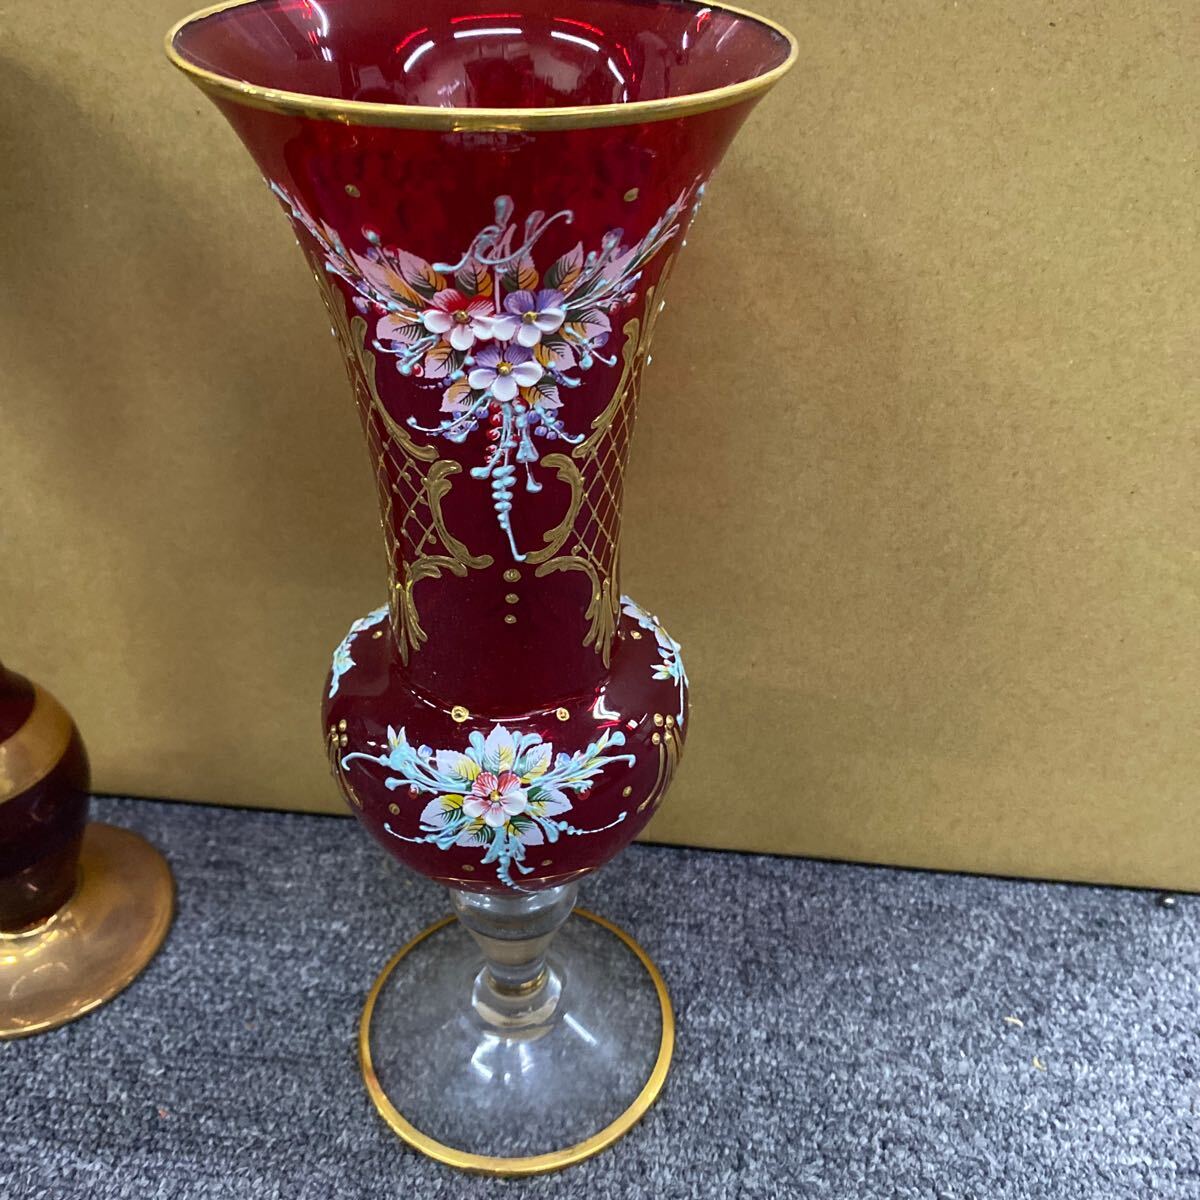 03674 редкий венецианский стакан золотая краска цветок входить цветок основа bohe mia стекло ваза ваза для цветов 2. комплект текущее состояние товар 